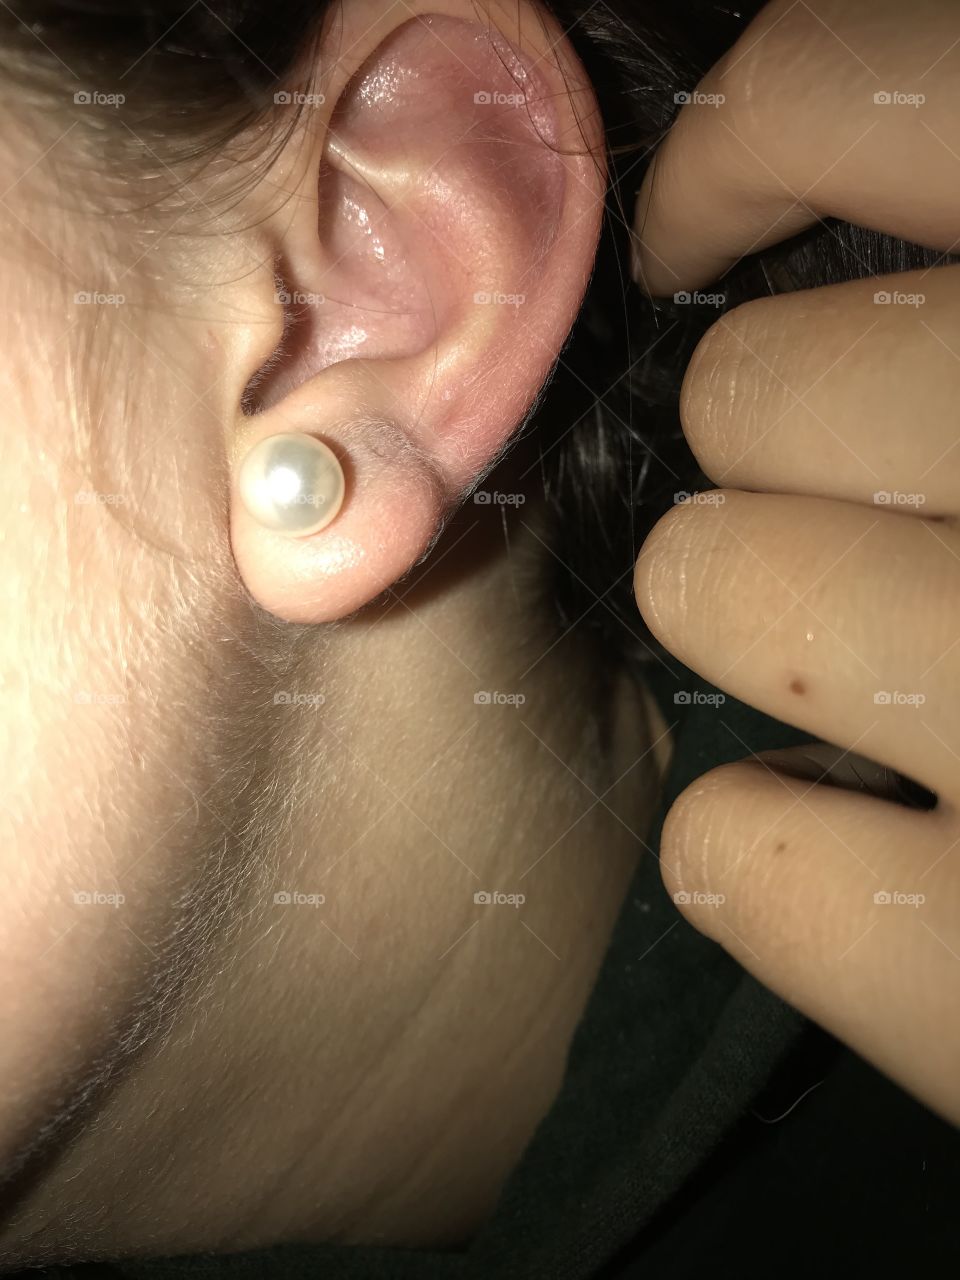 a fresh earlobe